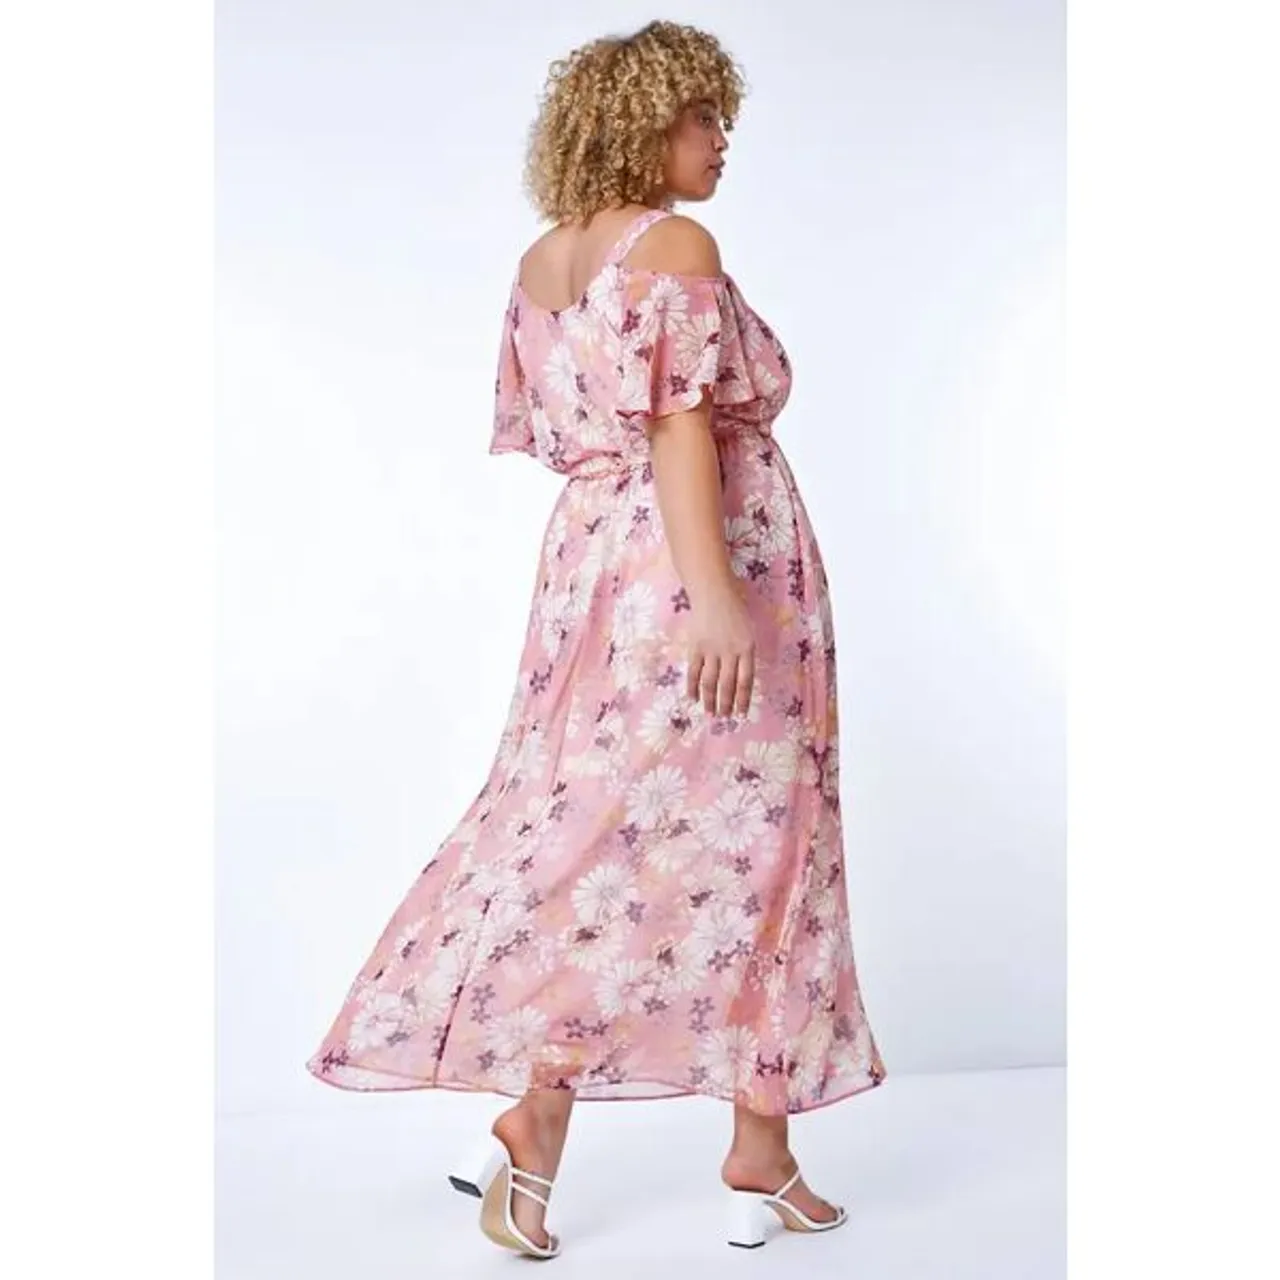 Roman Curve Roman Originals Curve Floral Print Cold Shoulder Maxi Dress in Pink - Size 3032 3032 female